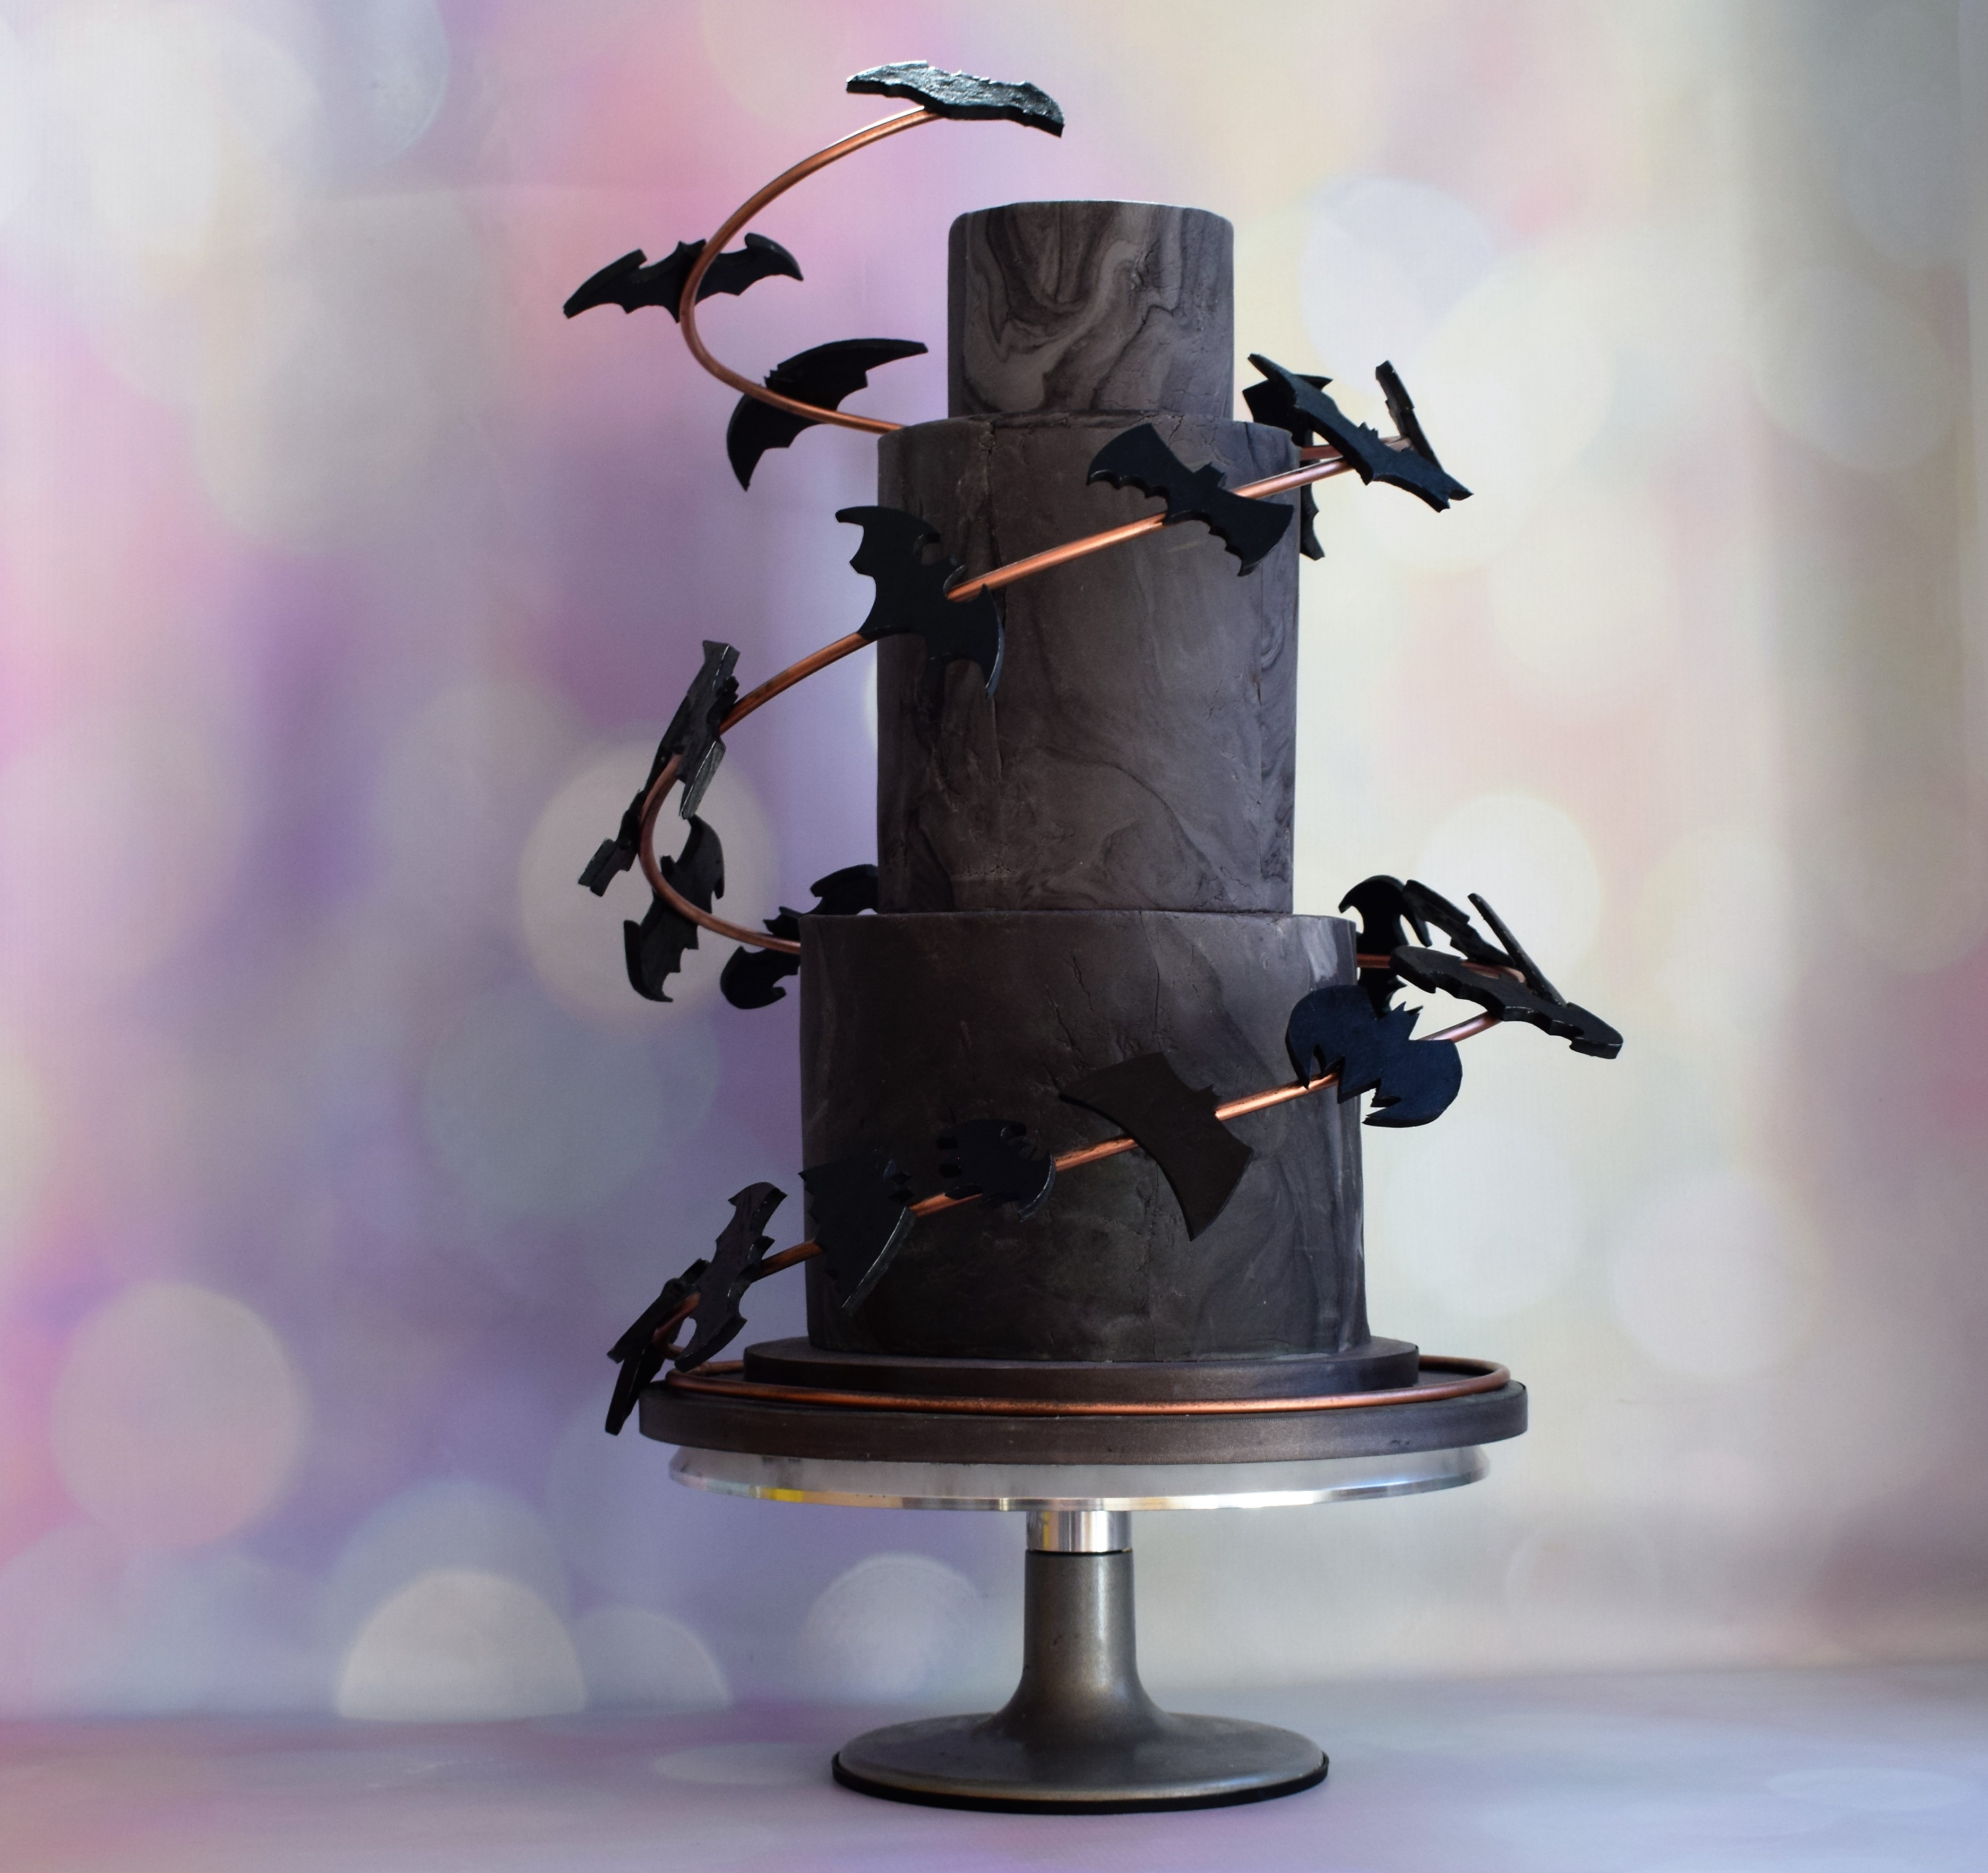 bake to the future - marvel wedding cake - batman wedding cake - alternative wedding cake